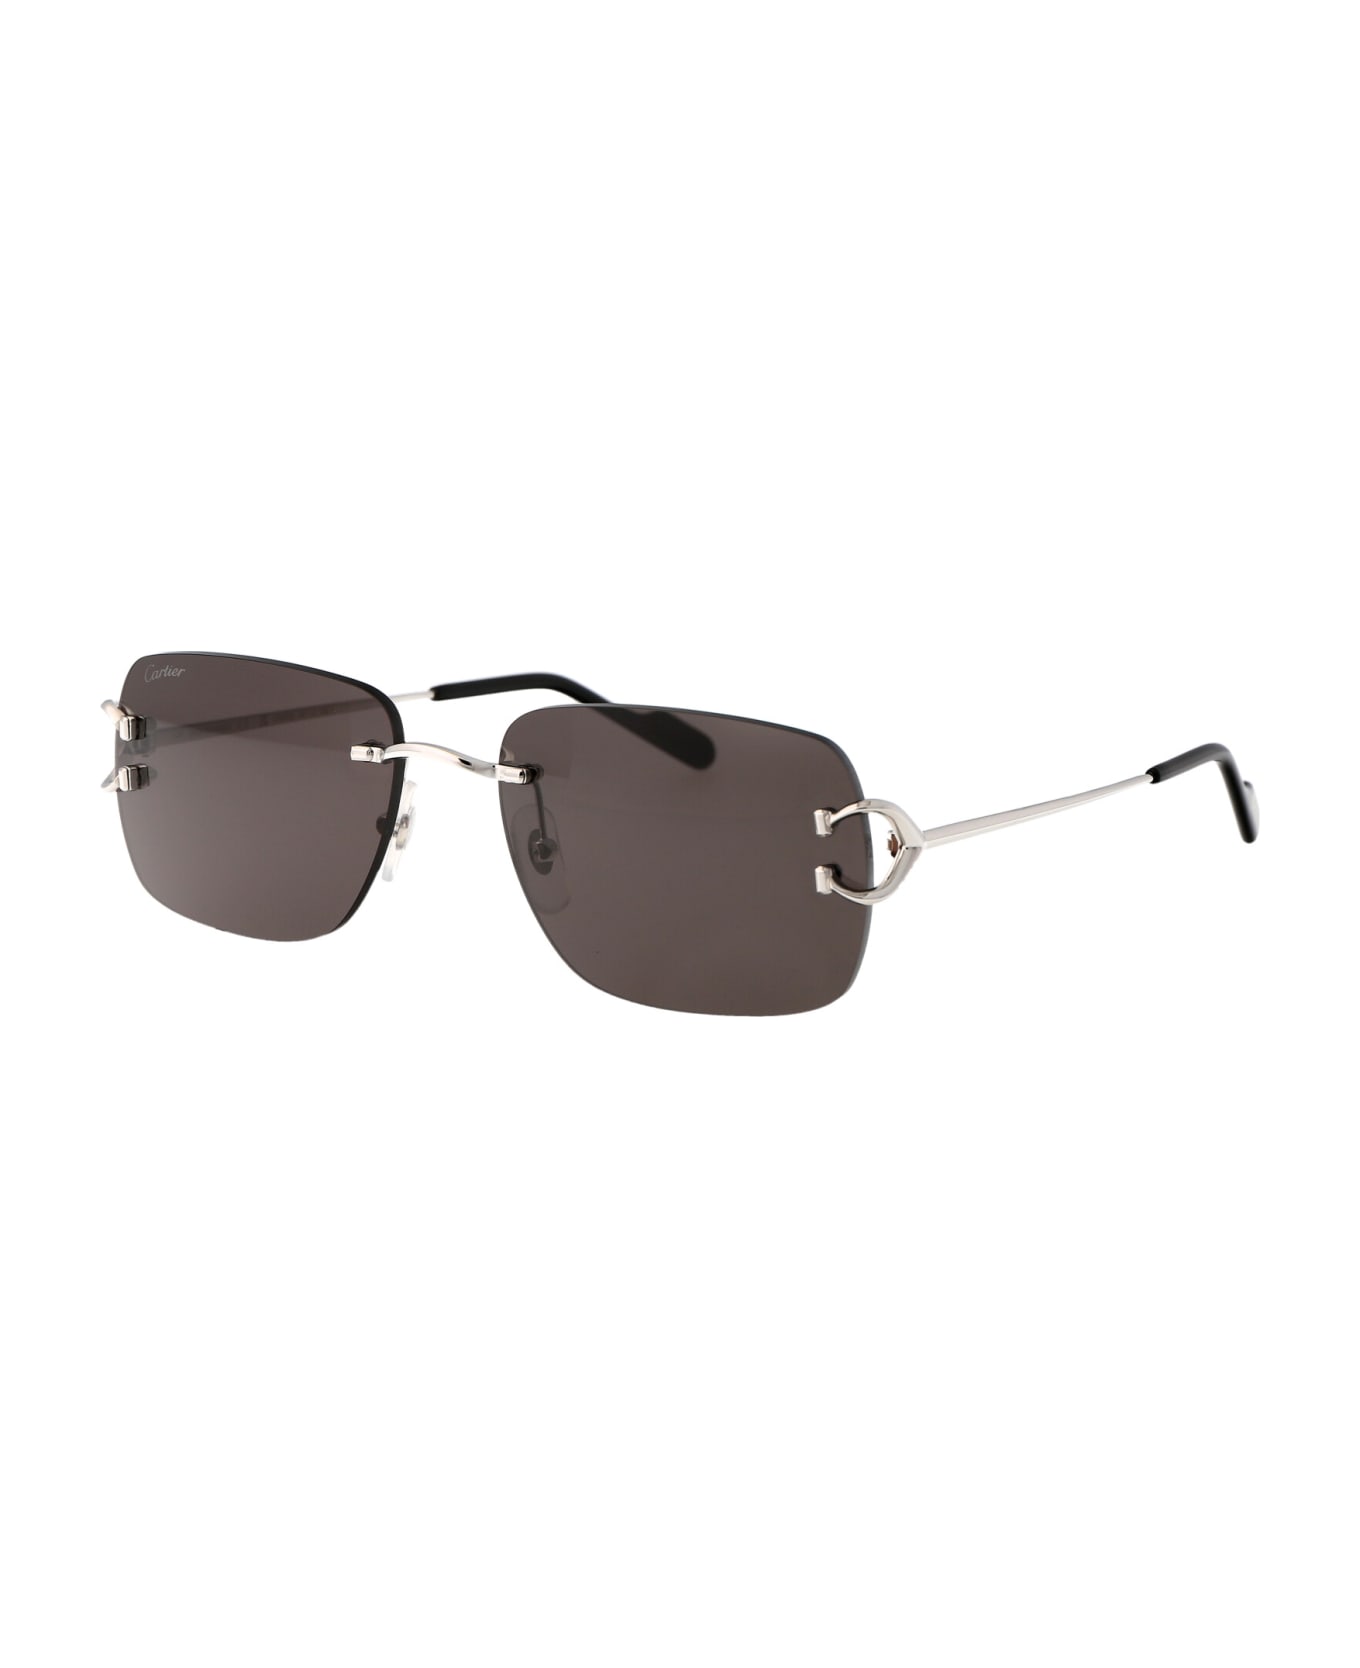 Cartier Eyewear Ct0330s Sunglasses - 001 SILVER SILVER GREY